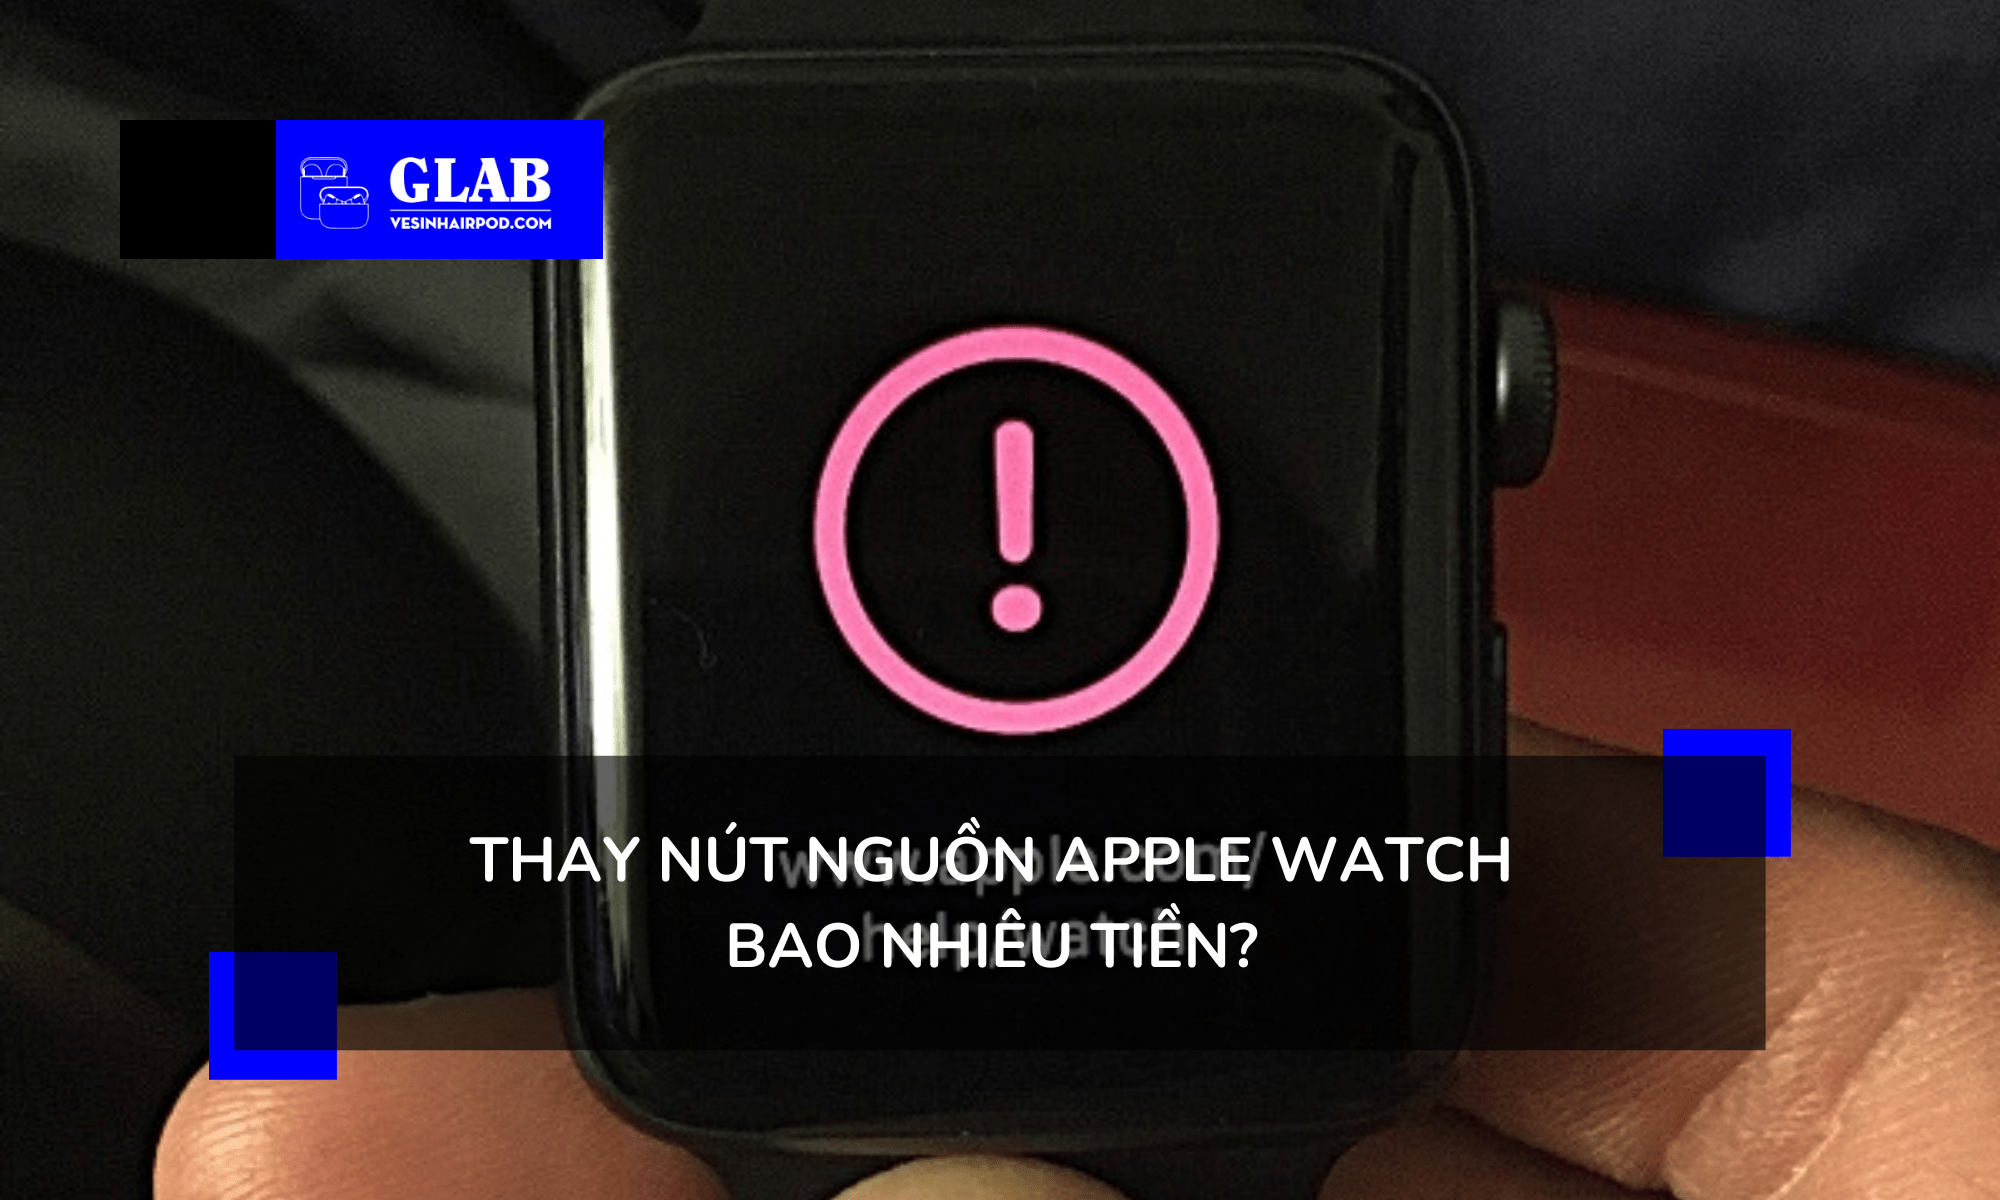 nut-nguon-apple-watch